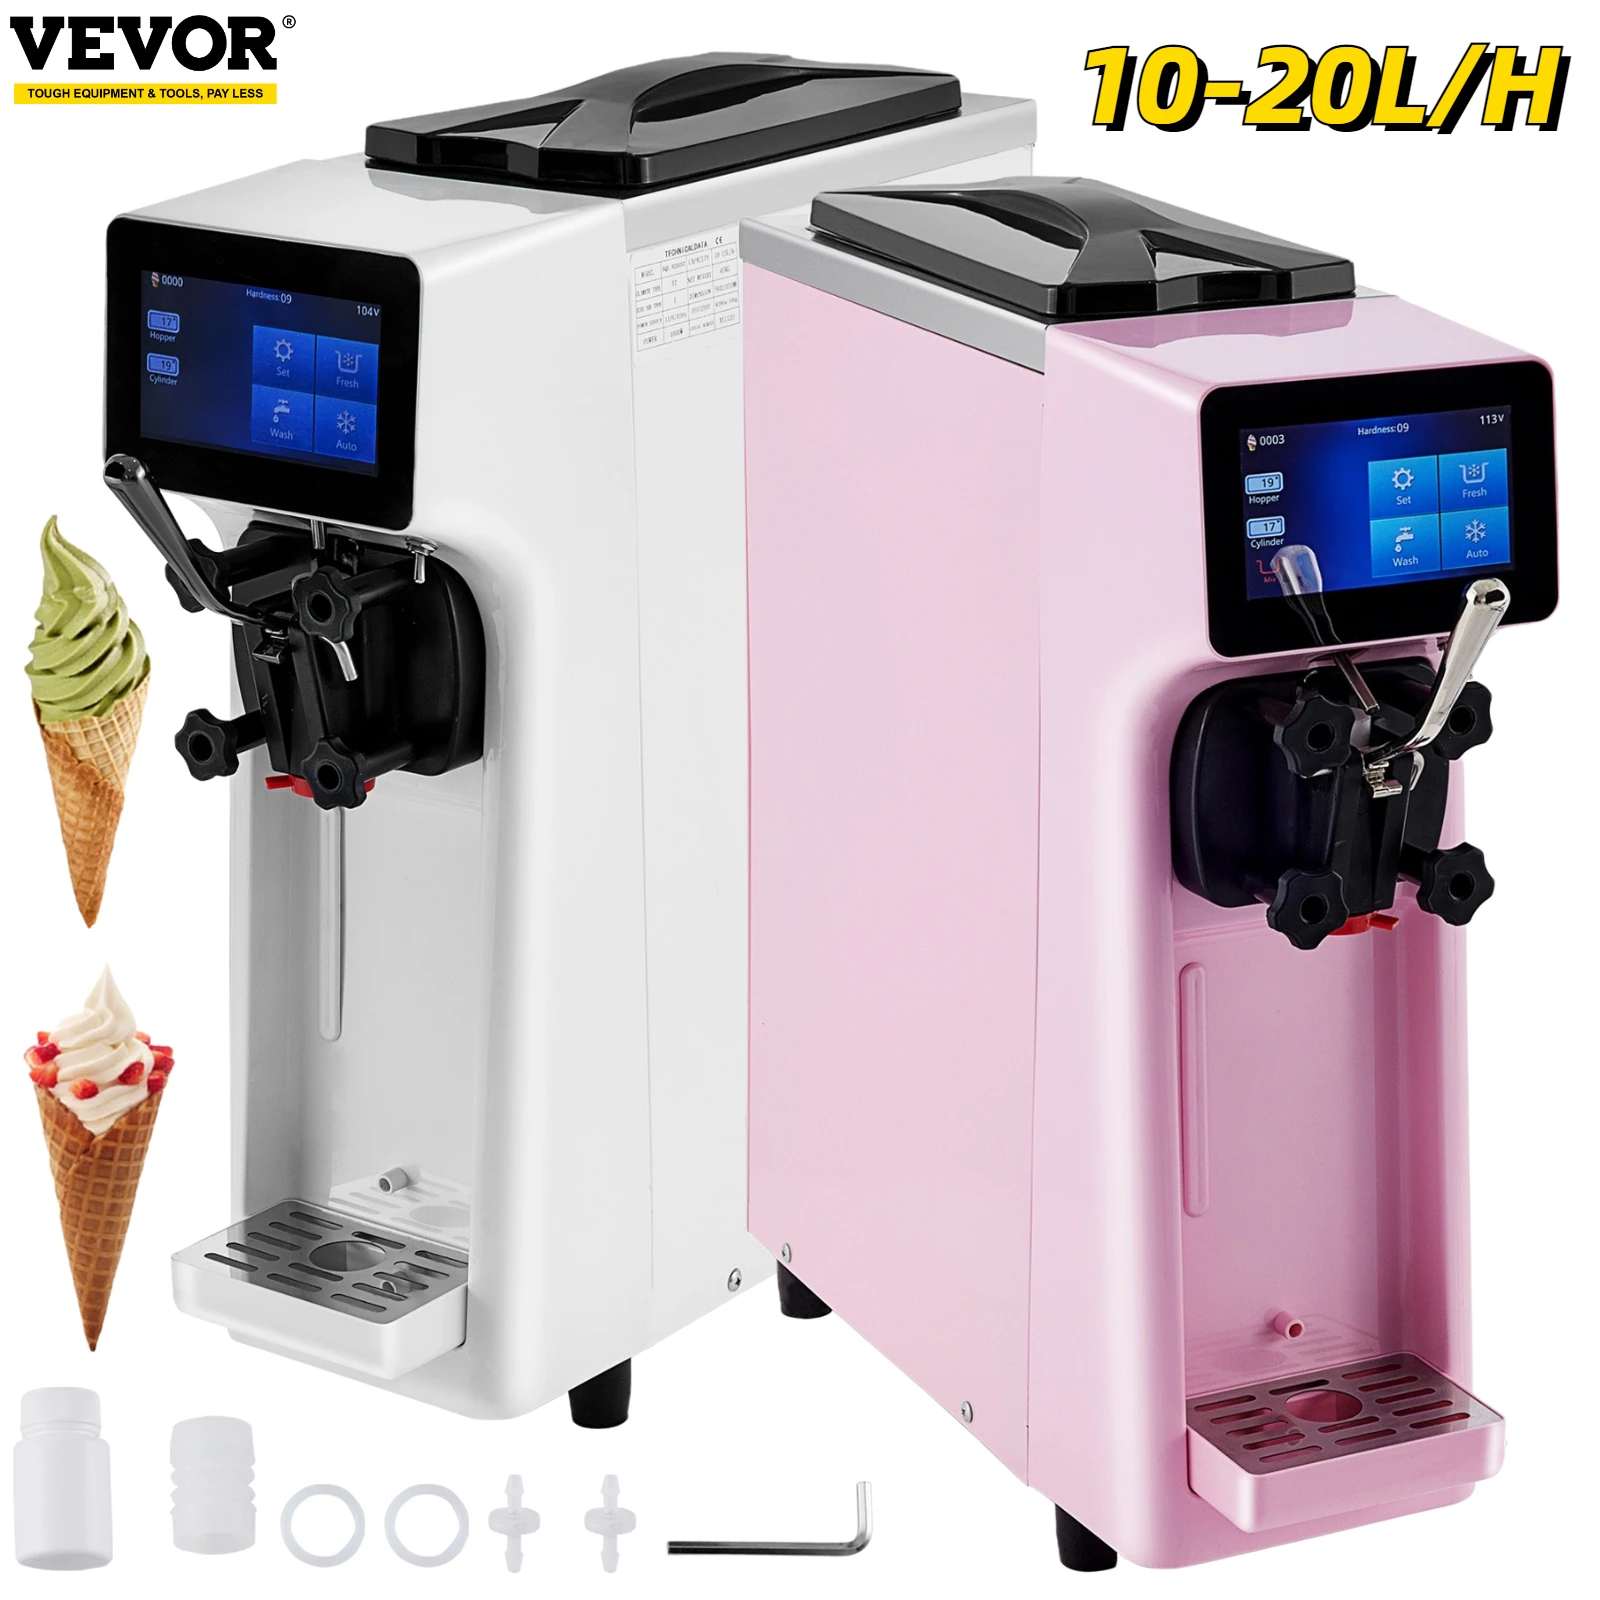 

VEVOR 10-20L/H Ice Cream Maker Commercial Single Flavor Countertop Gelato Sorbet Yogurt Home Freezing Equipment Vending Machine